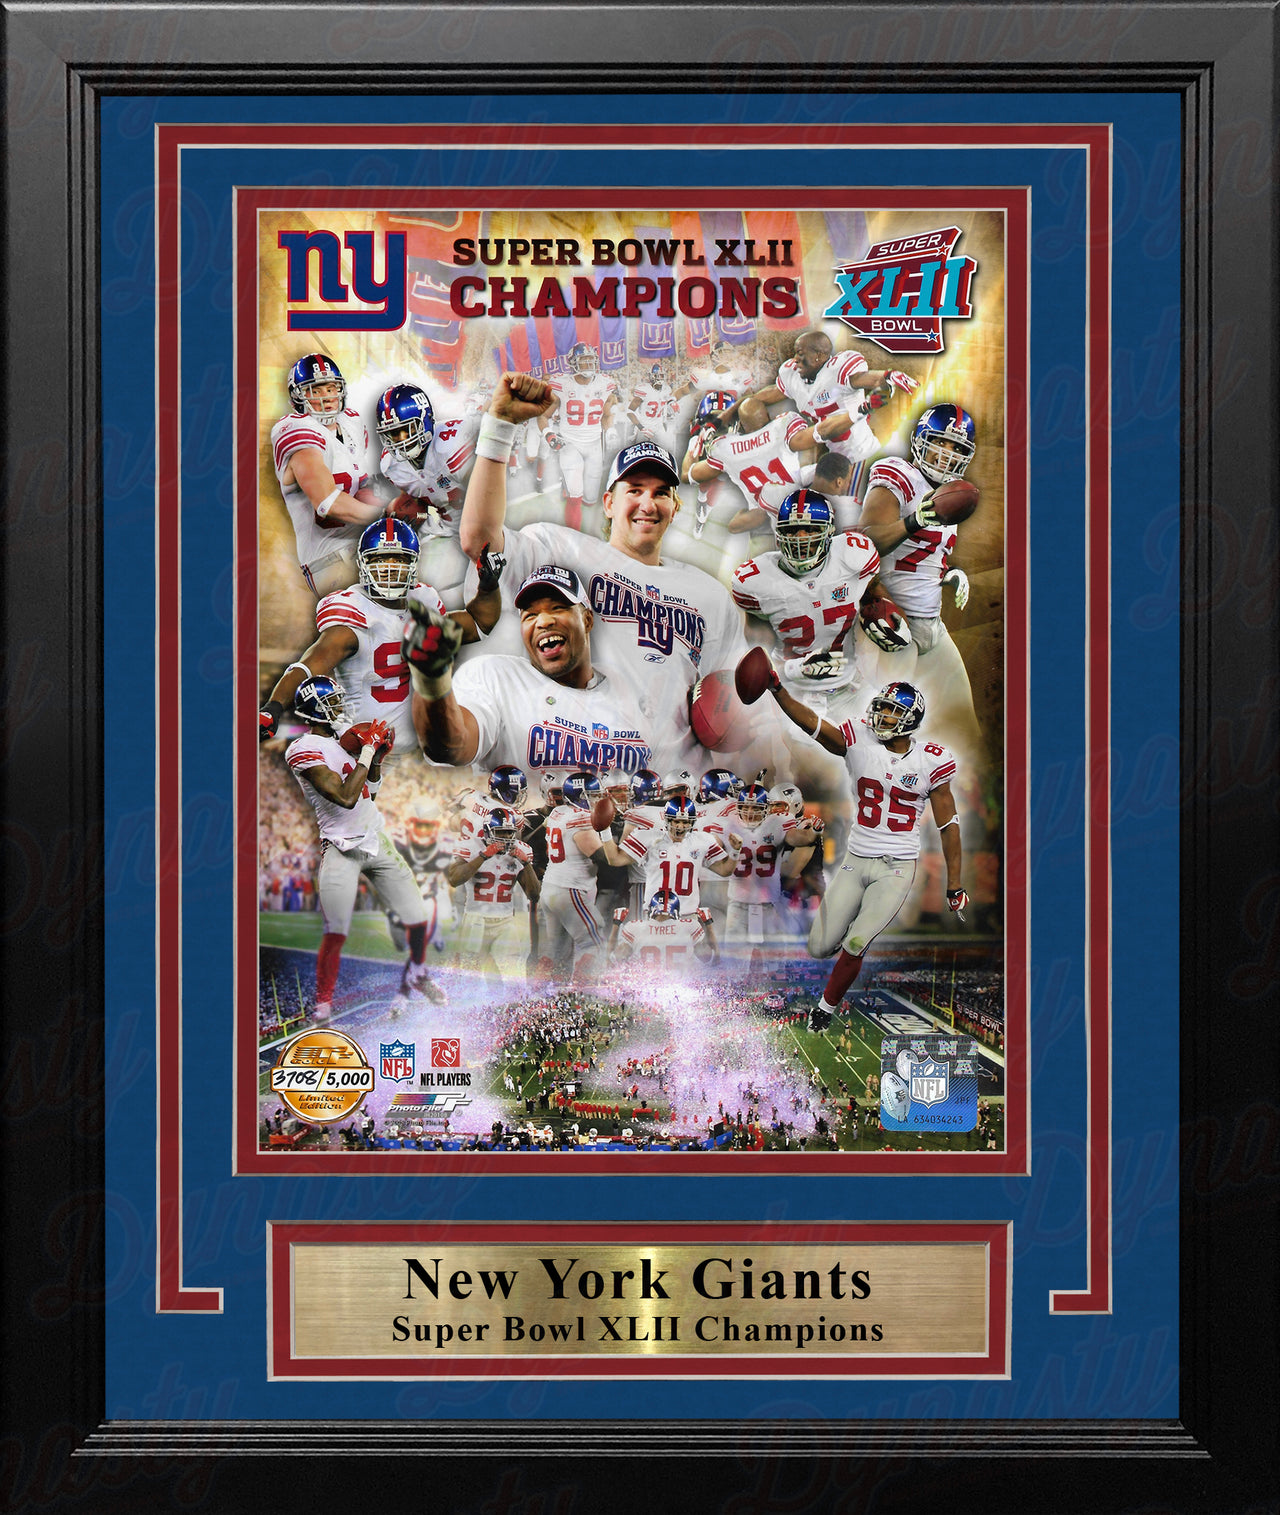 New York Giants Super Bowl XLII Champions 8" x 10" Framed Football Collage Photo - Dynasty Sports & Framing 